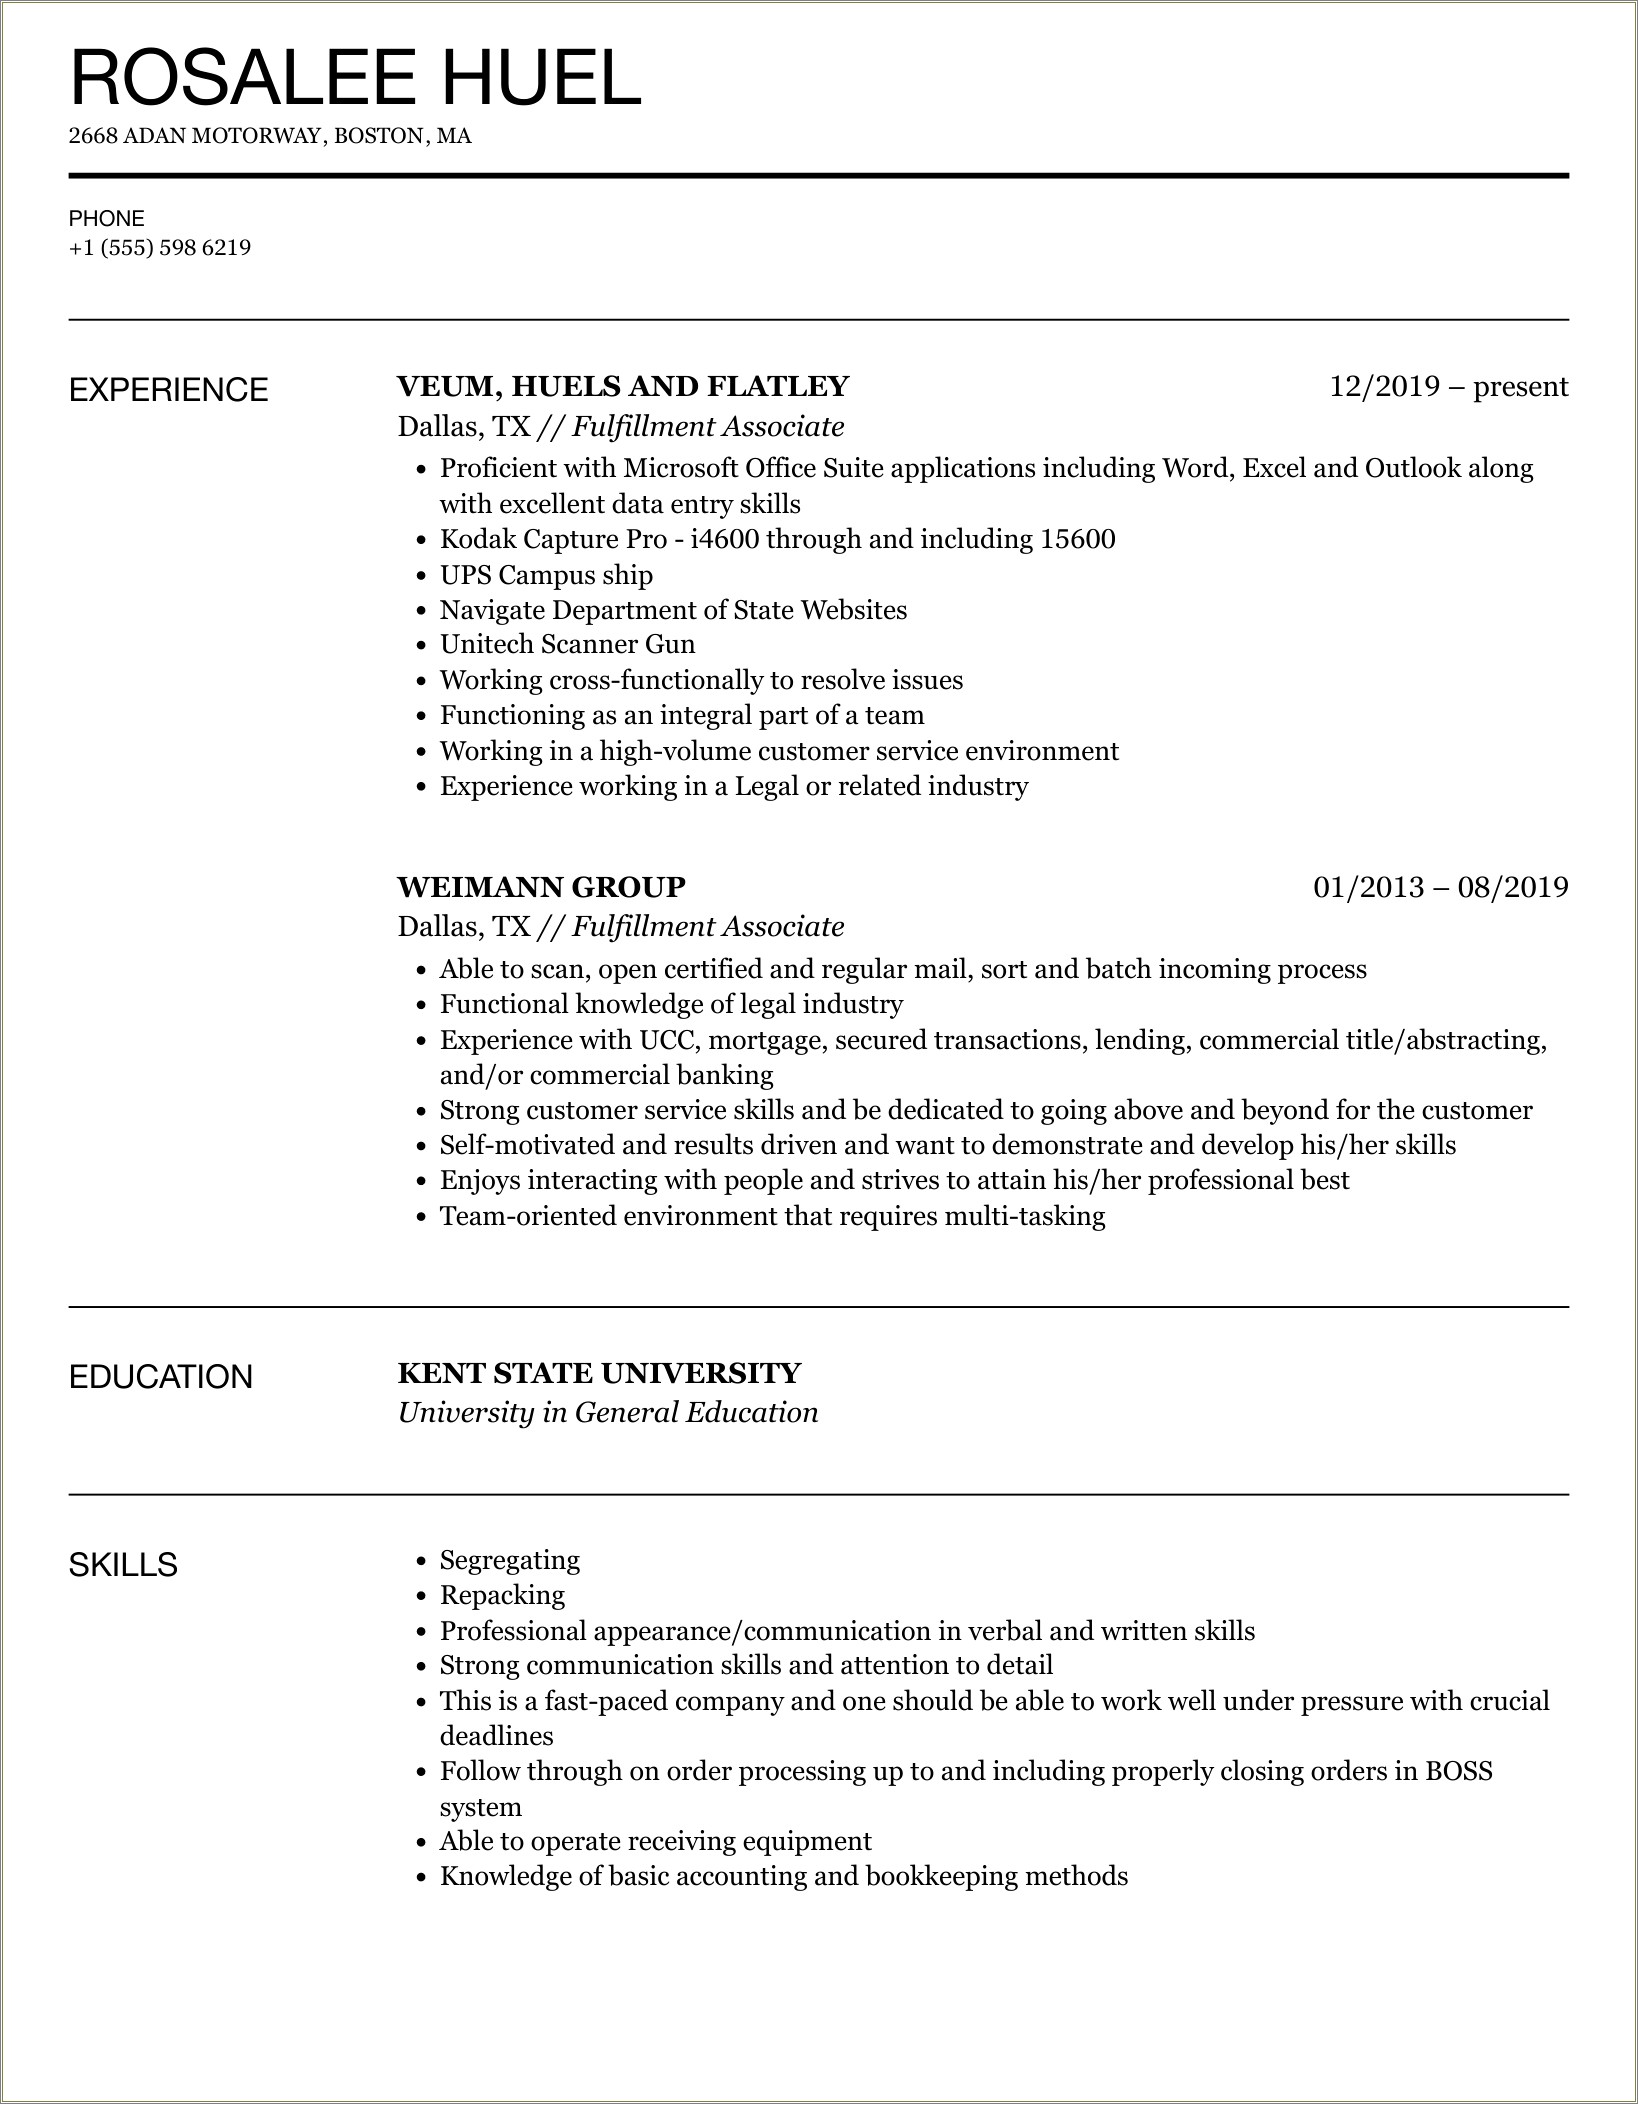 Amazon Picker Job Description For Resume